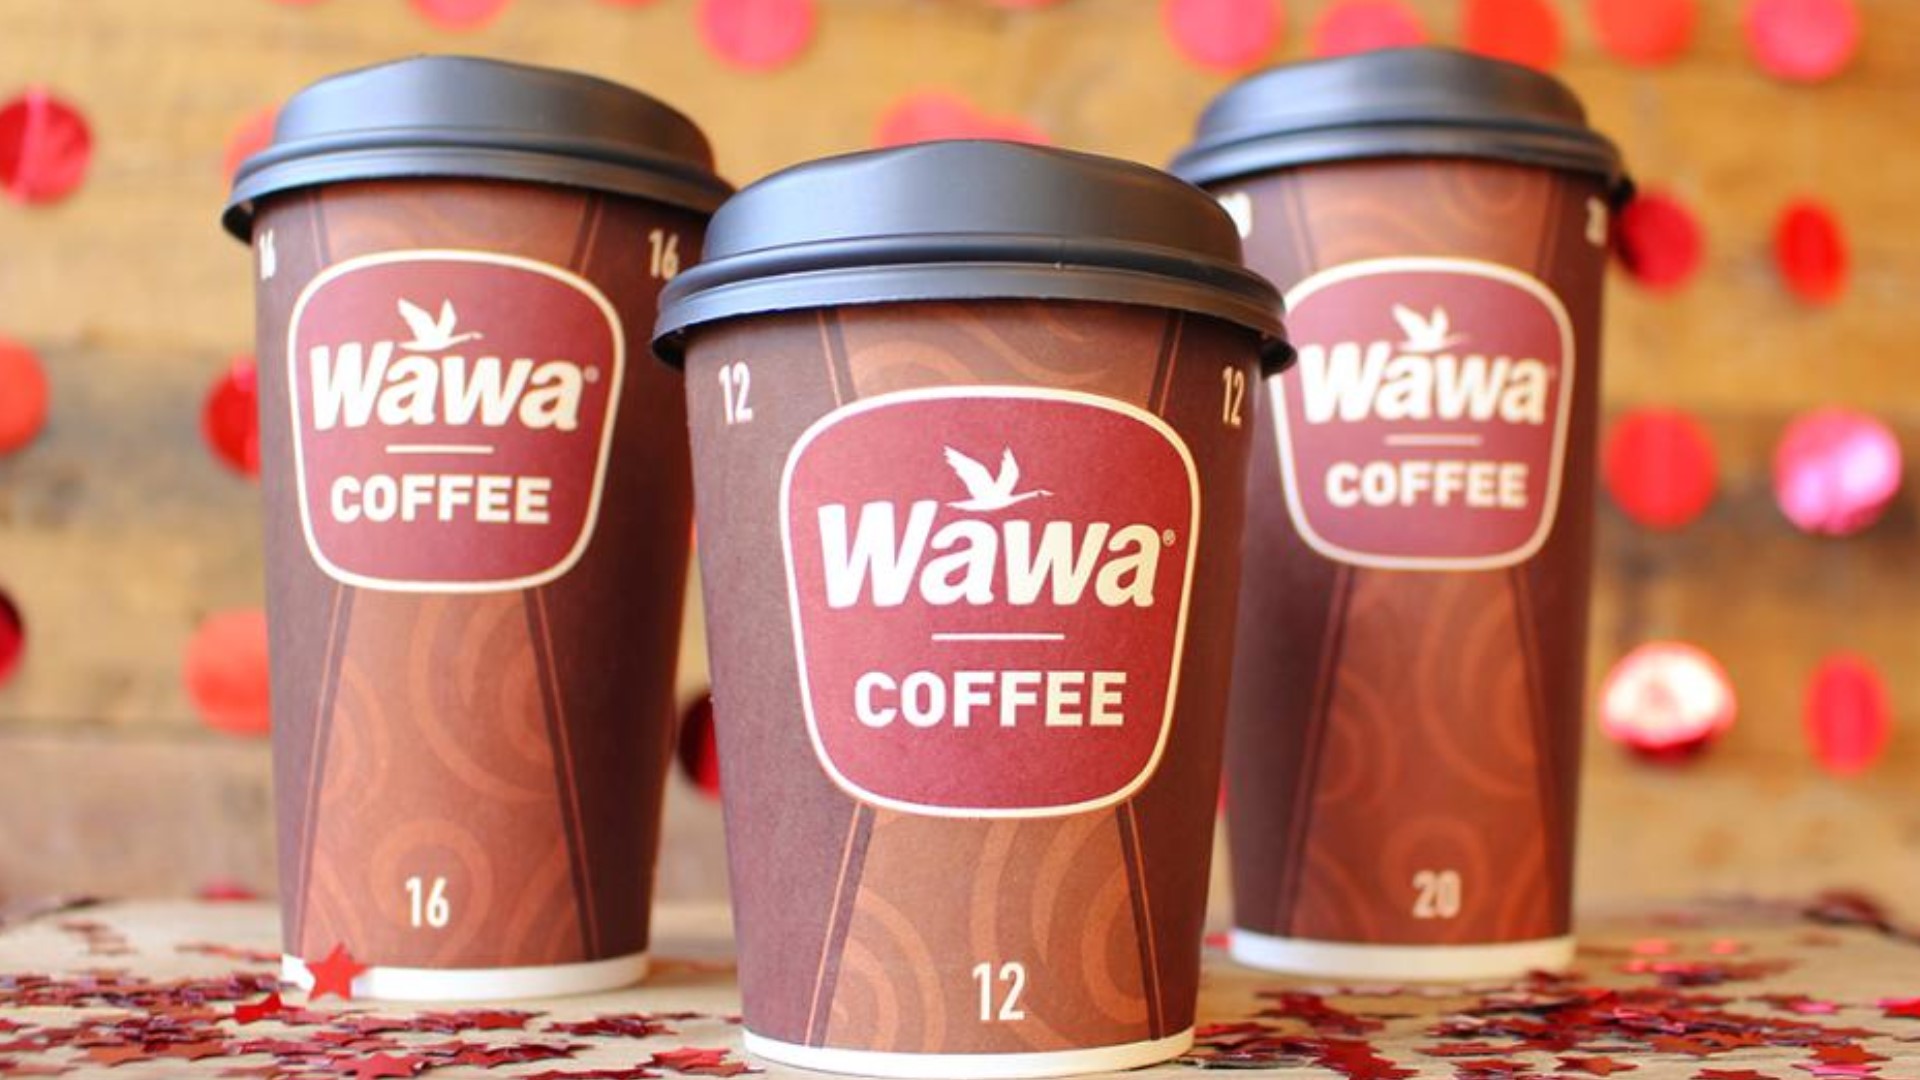 Wawa offers free coffee to teachers and school staff